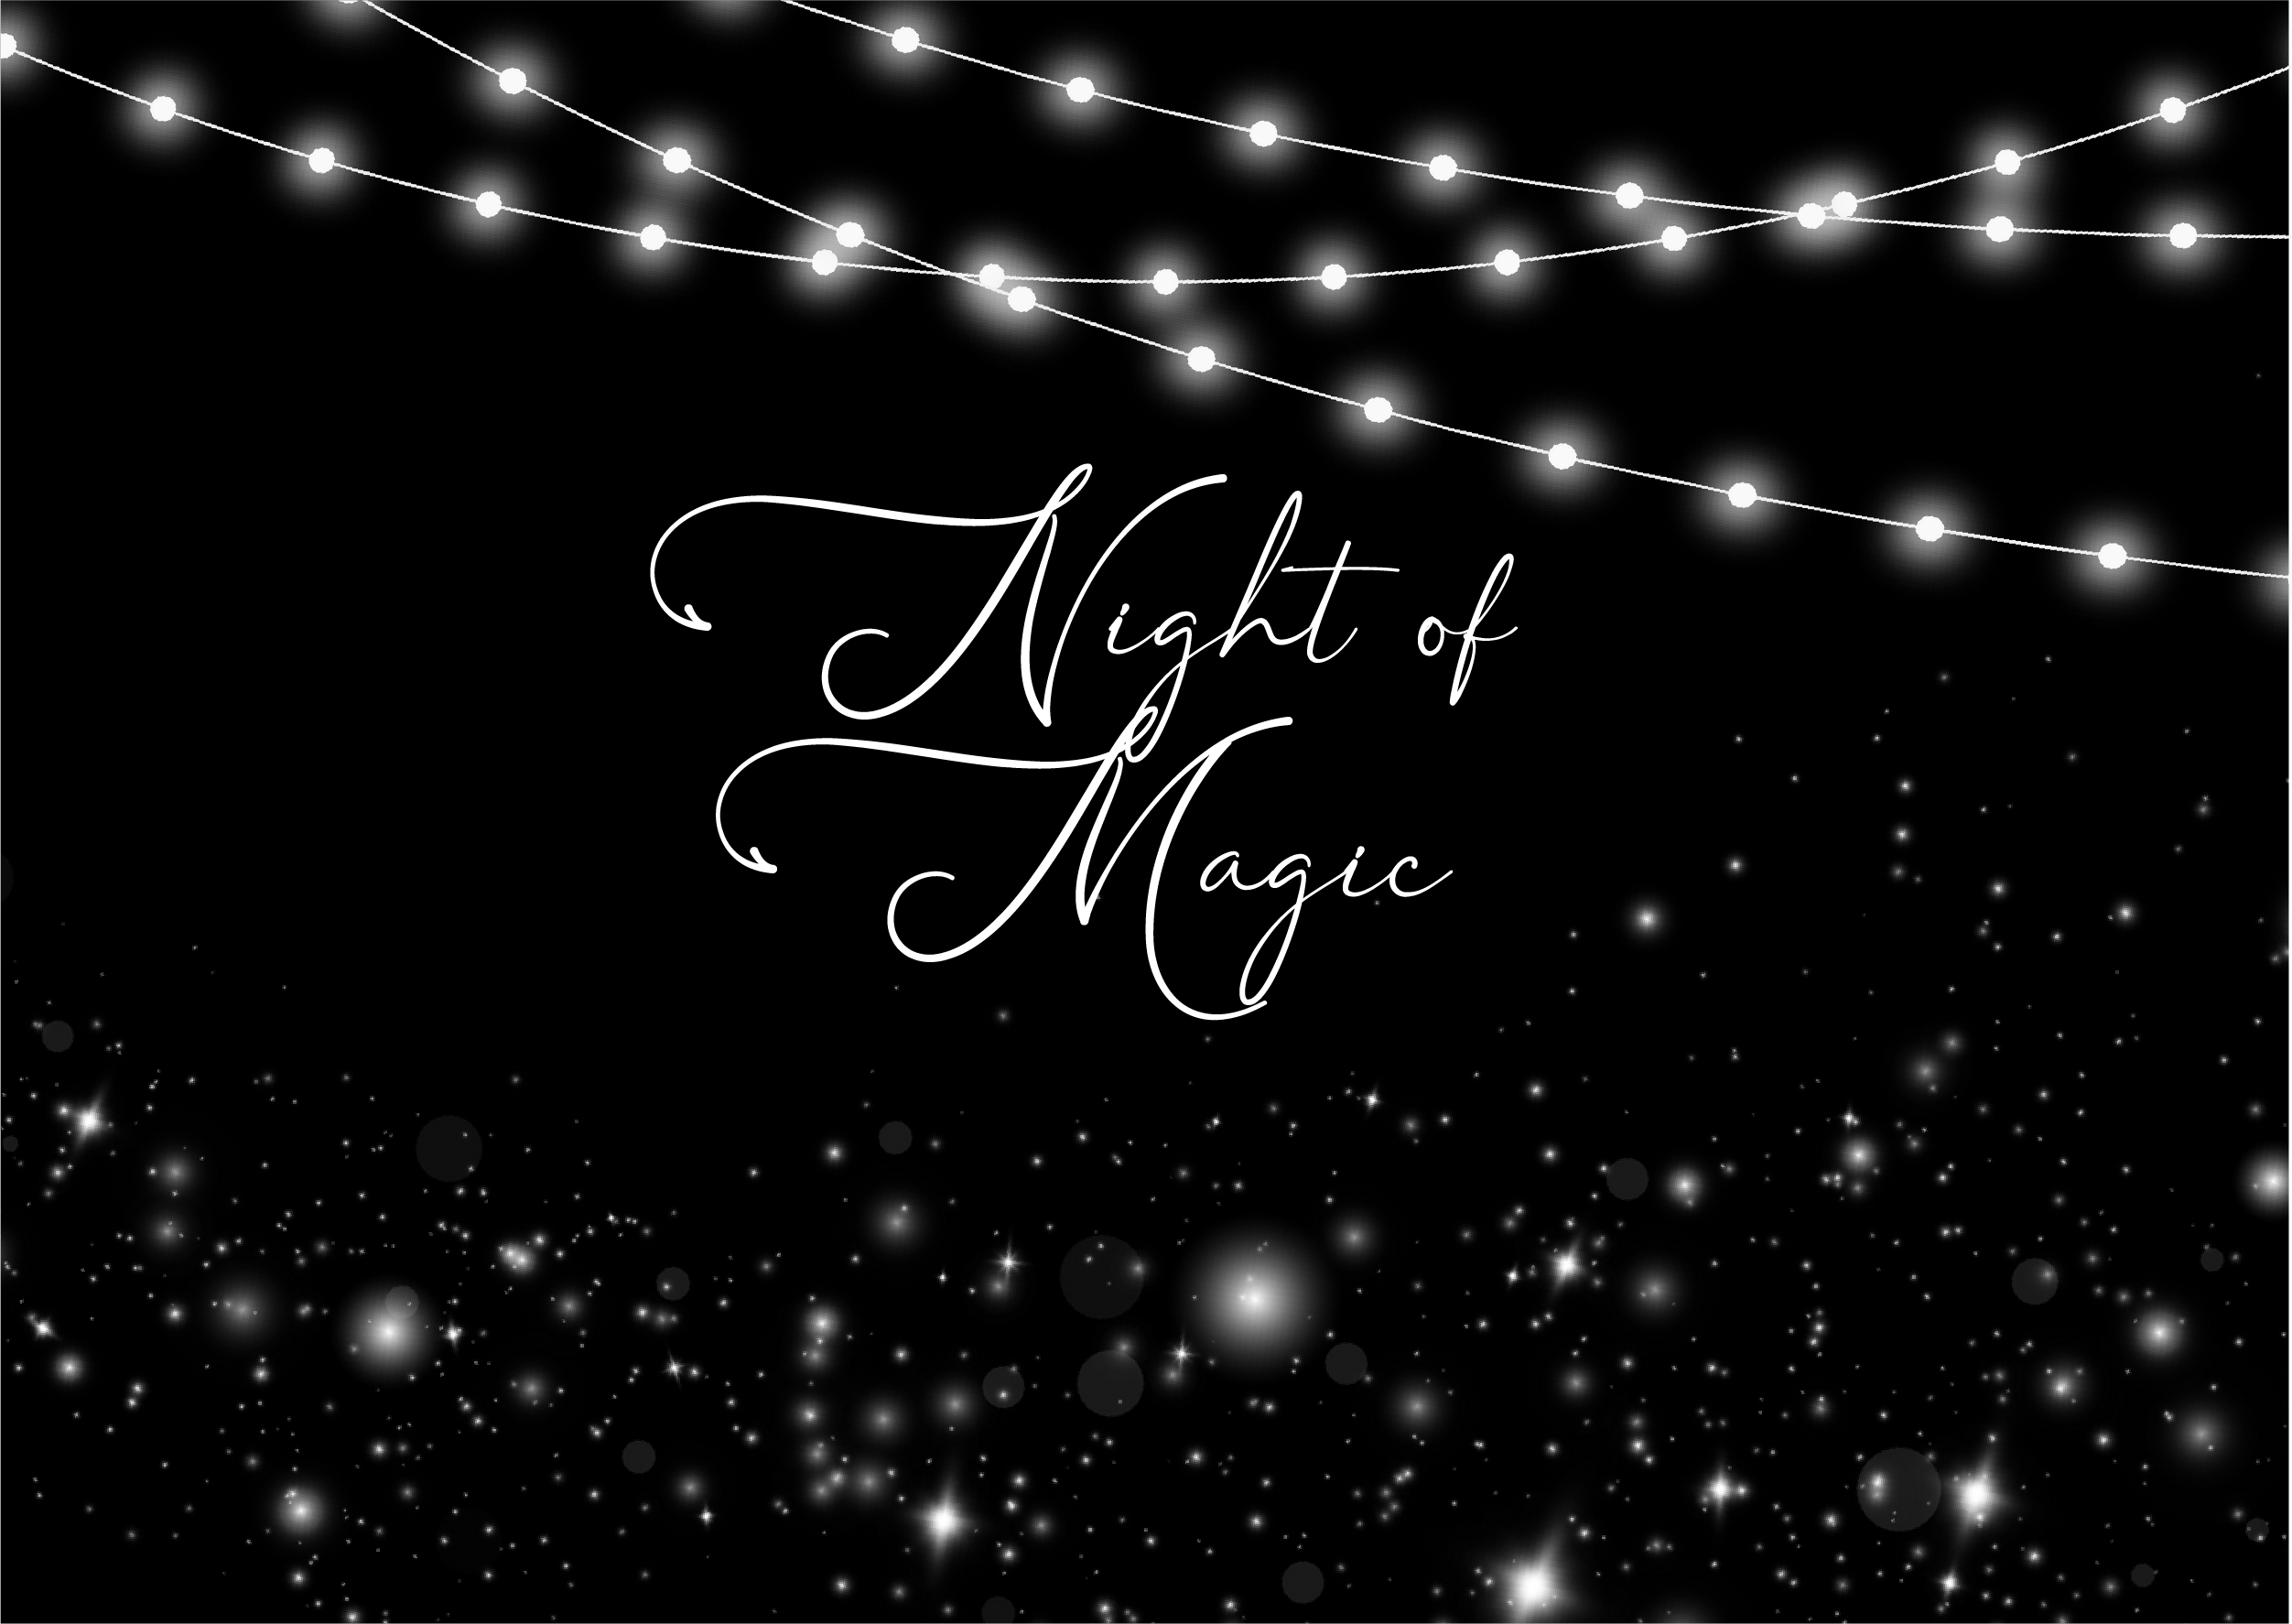 Night of Magic